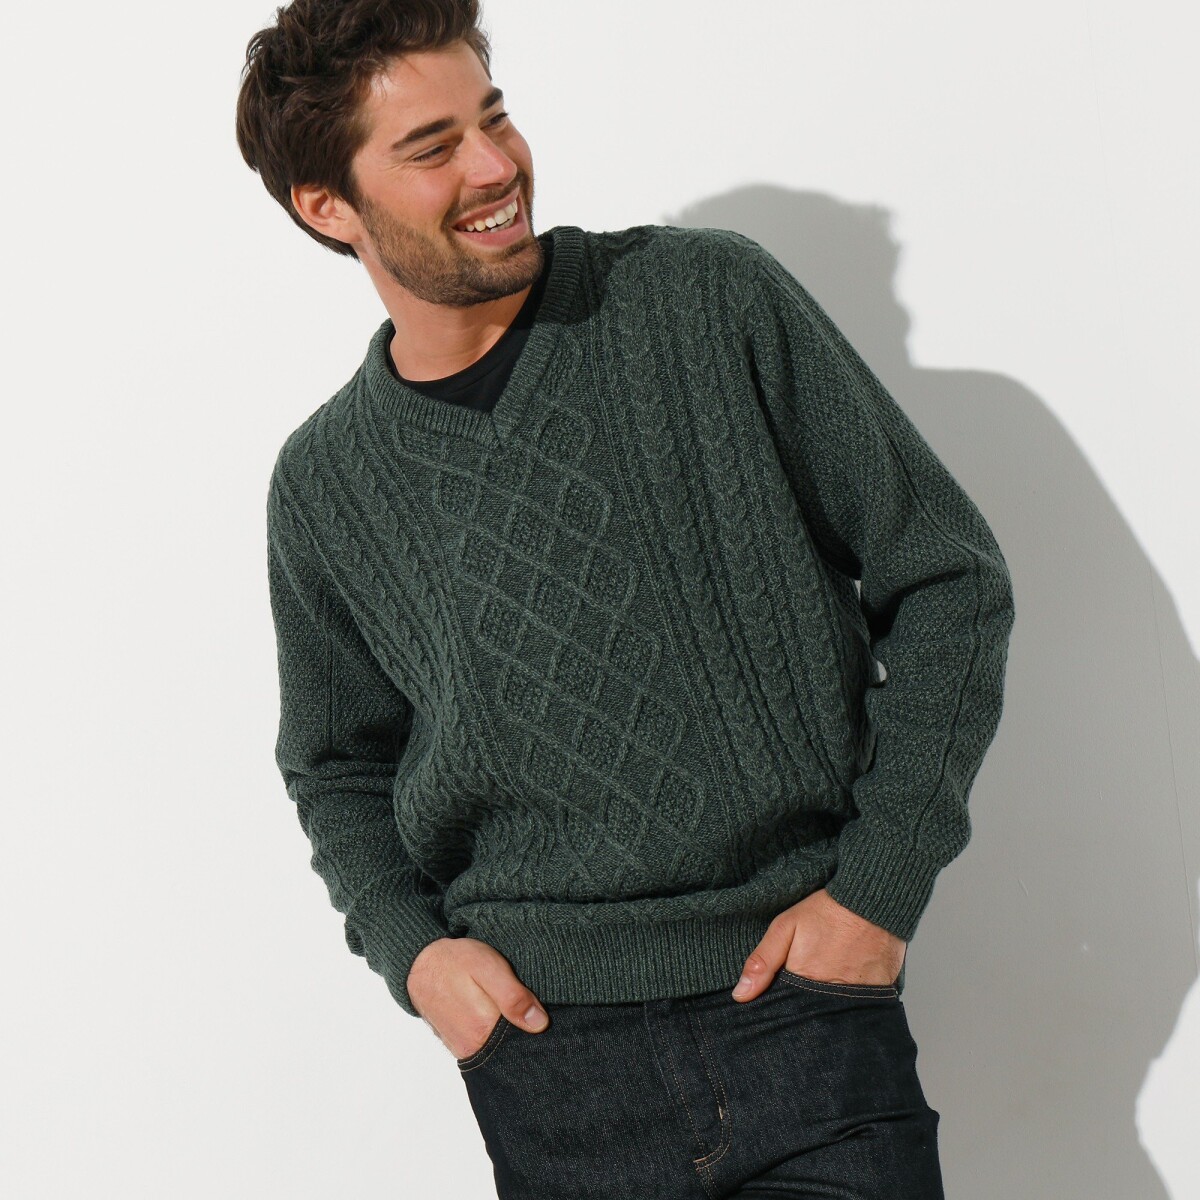 Blancheporte Irský pulovr s výstřihem do V khaki melír 8796 (M)